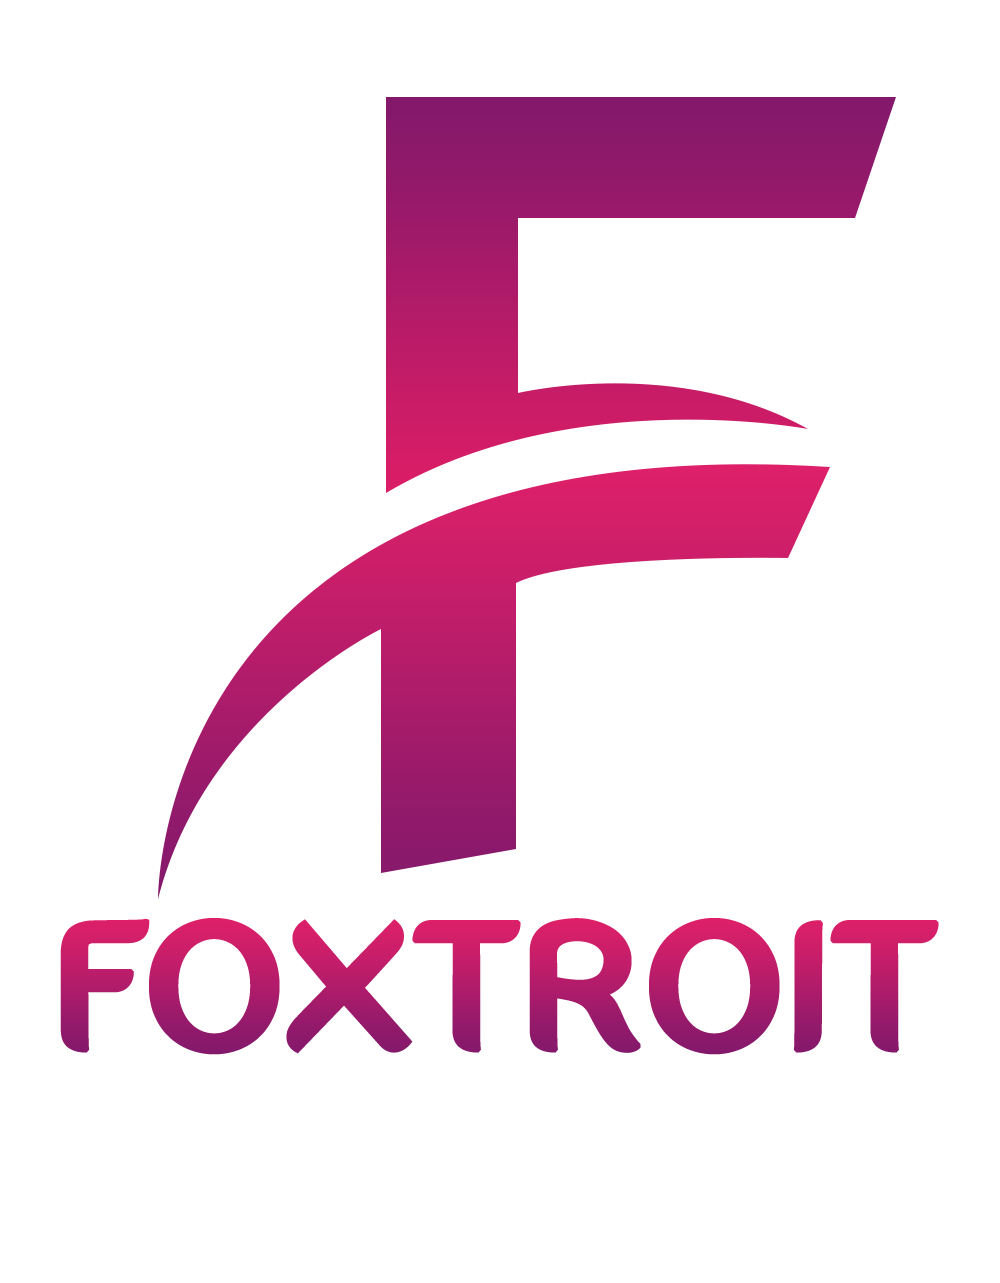 FOXTROIT DESIGN AND CONSULTANCY